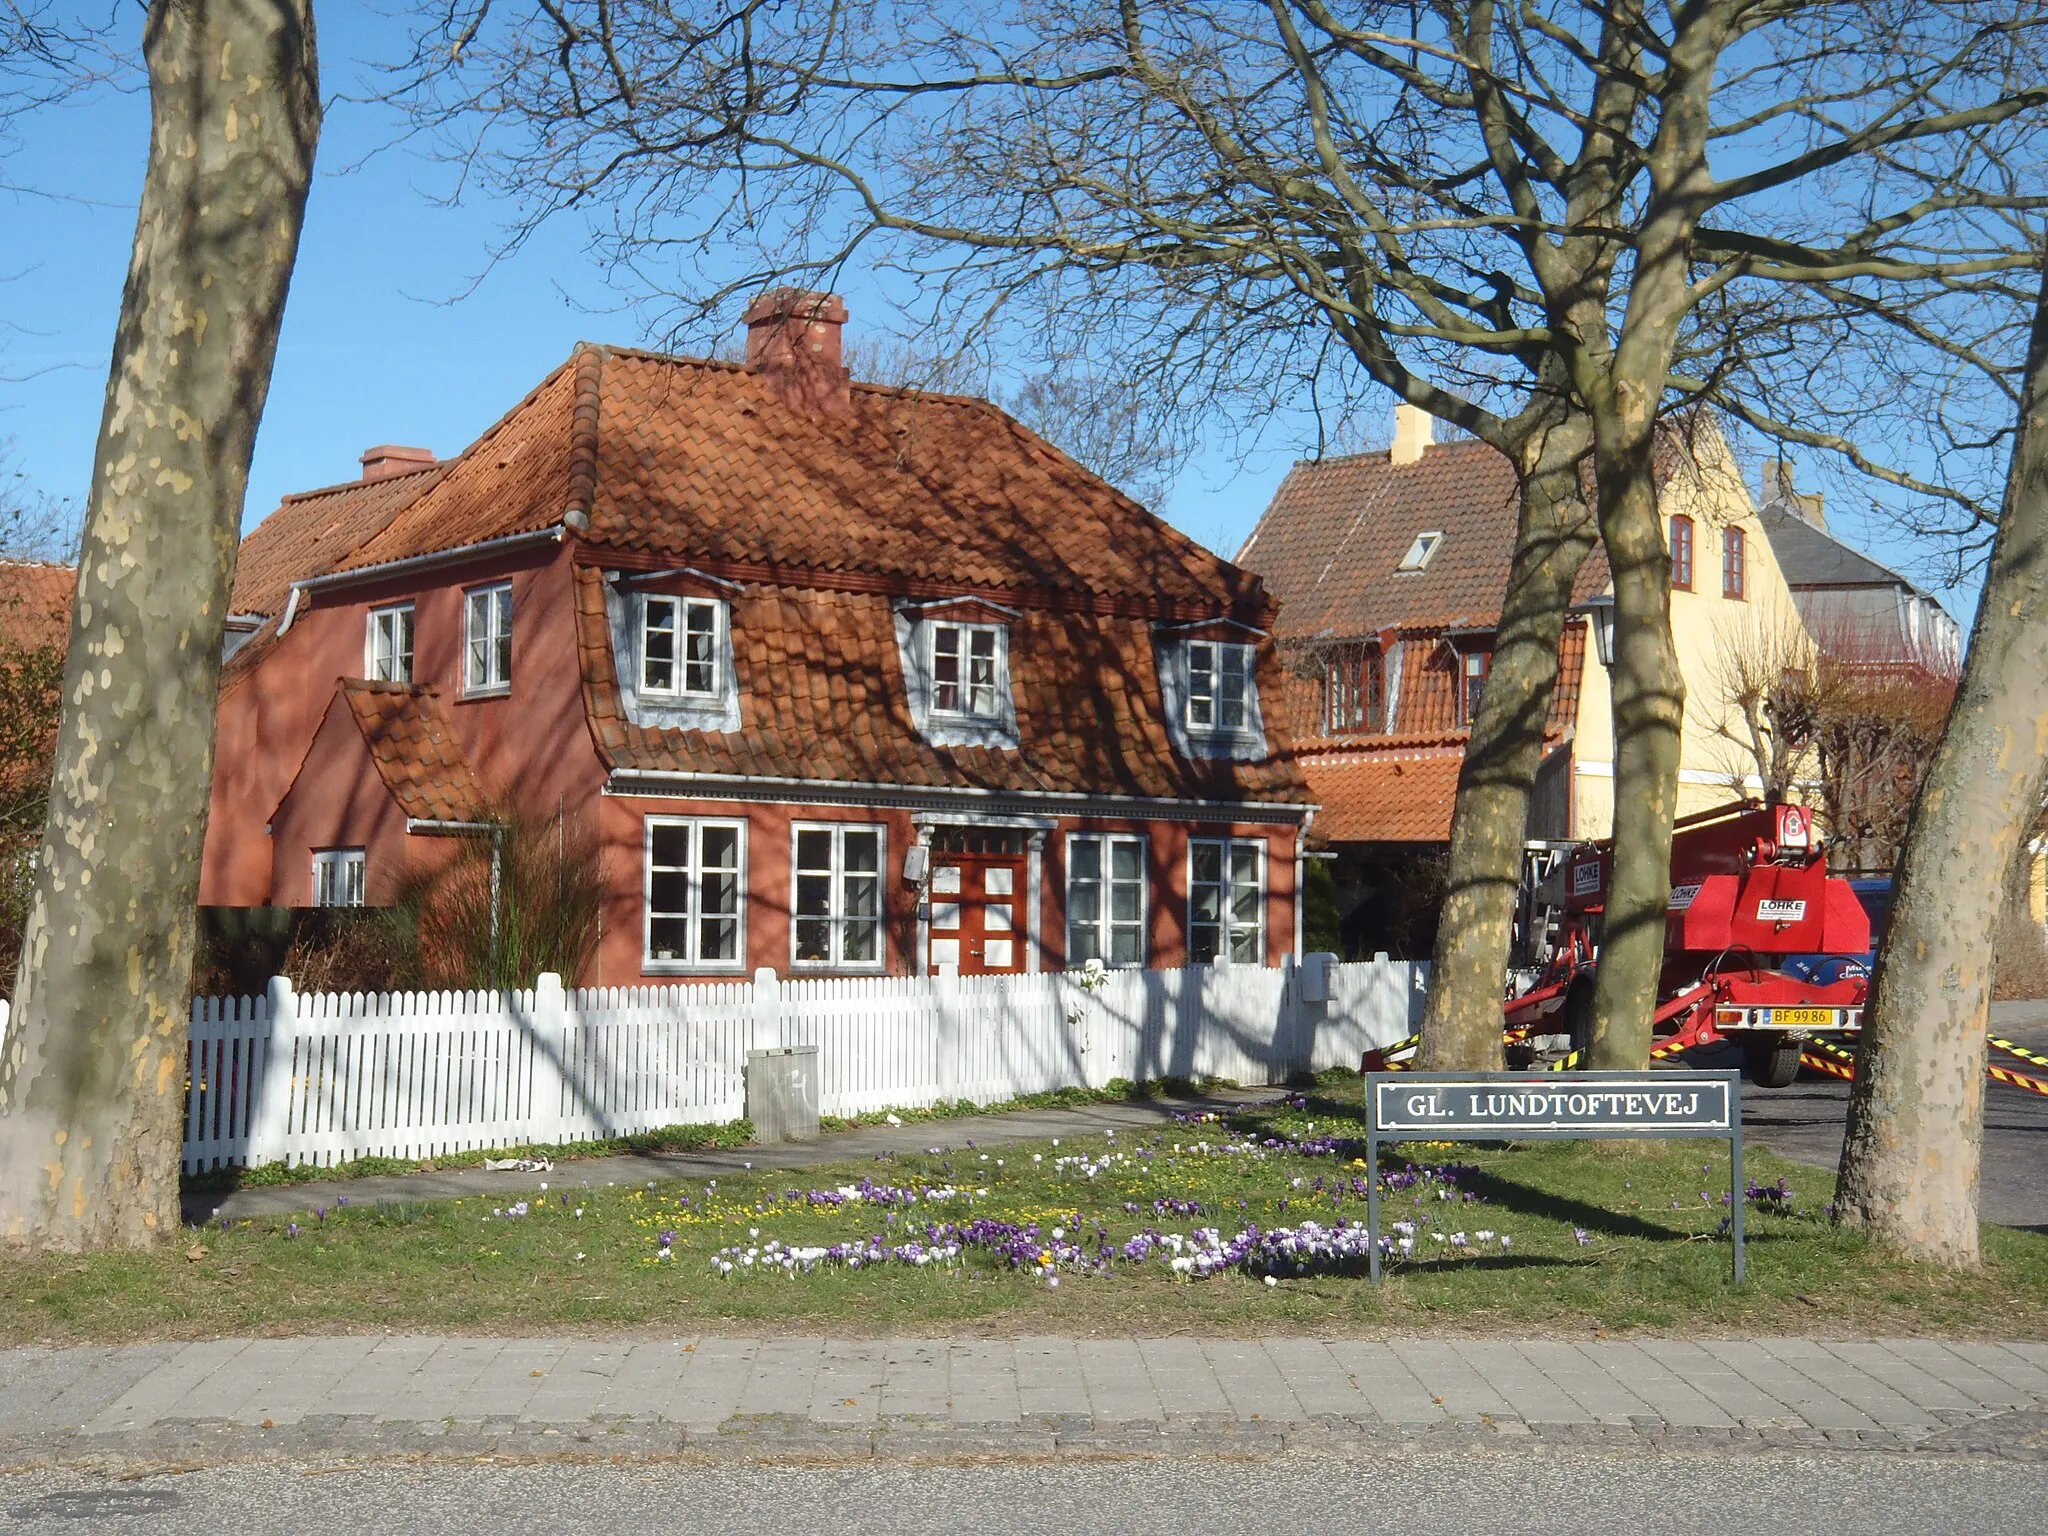 Photo showing: Hus i Bondebyen, Gammel Lundtoftevej, Kongens Lyngby